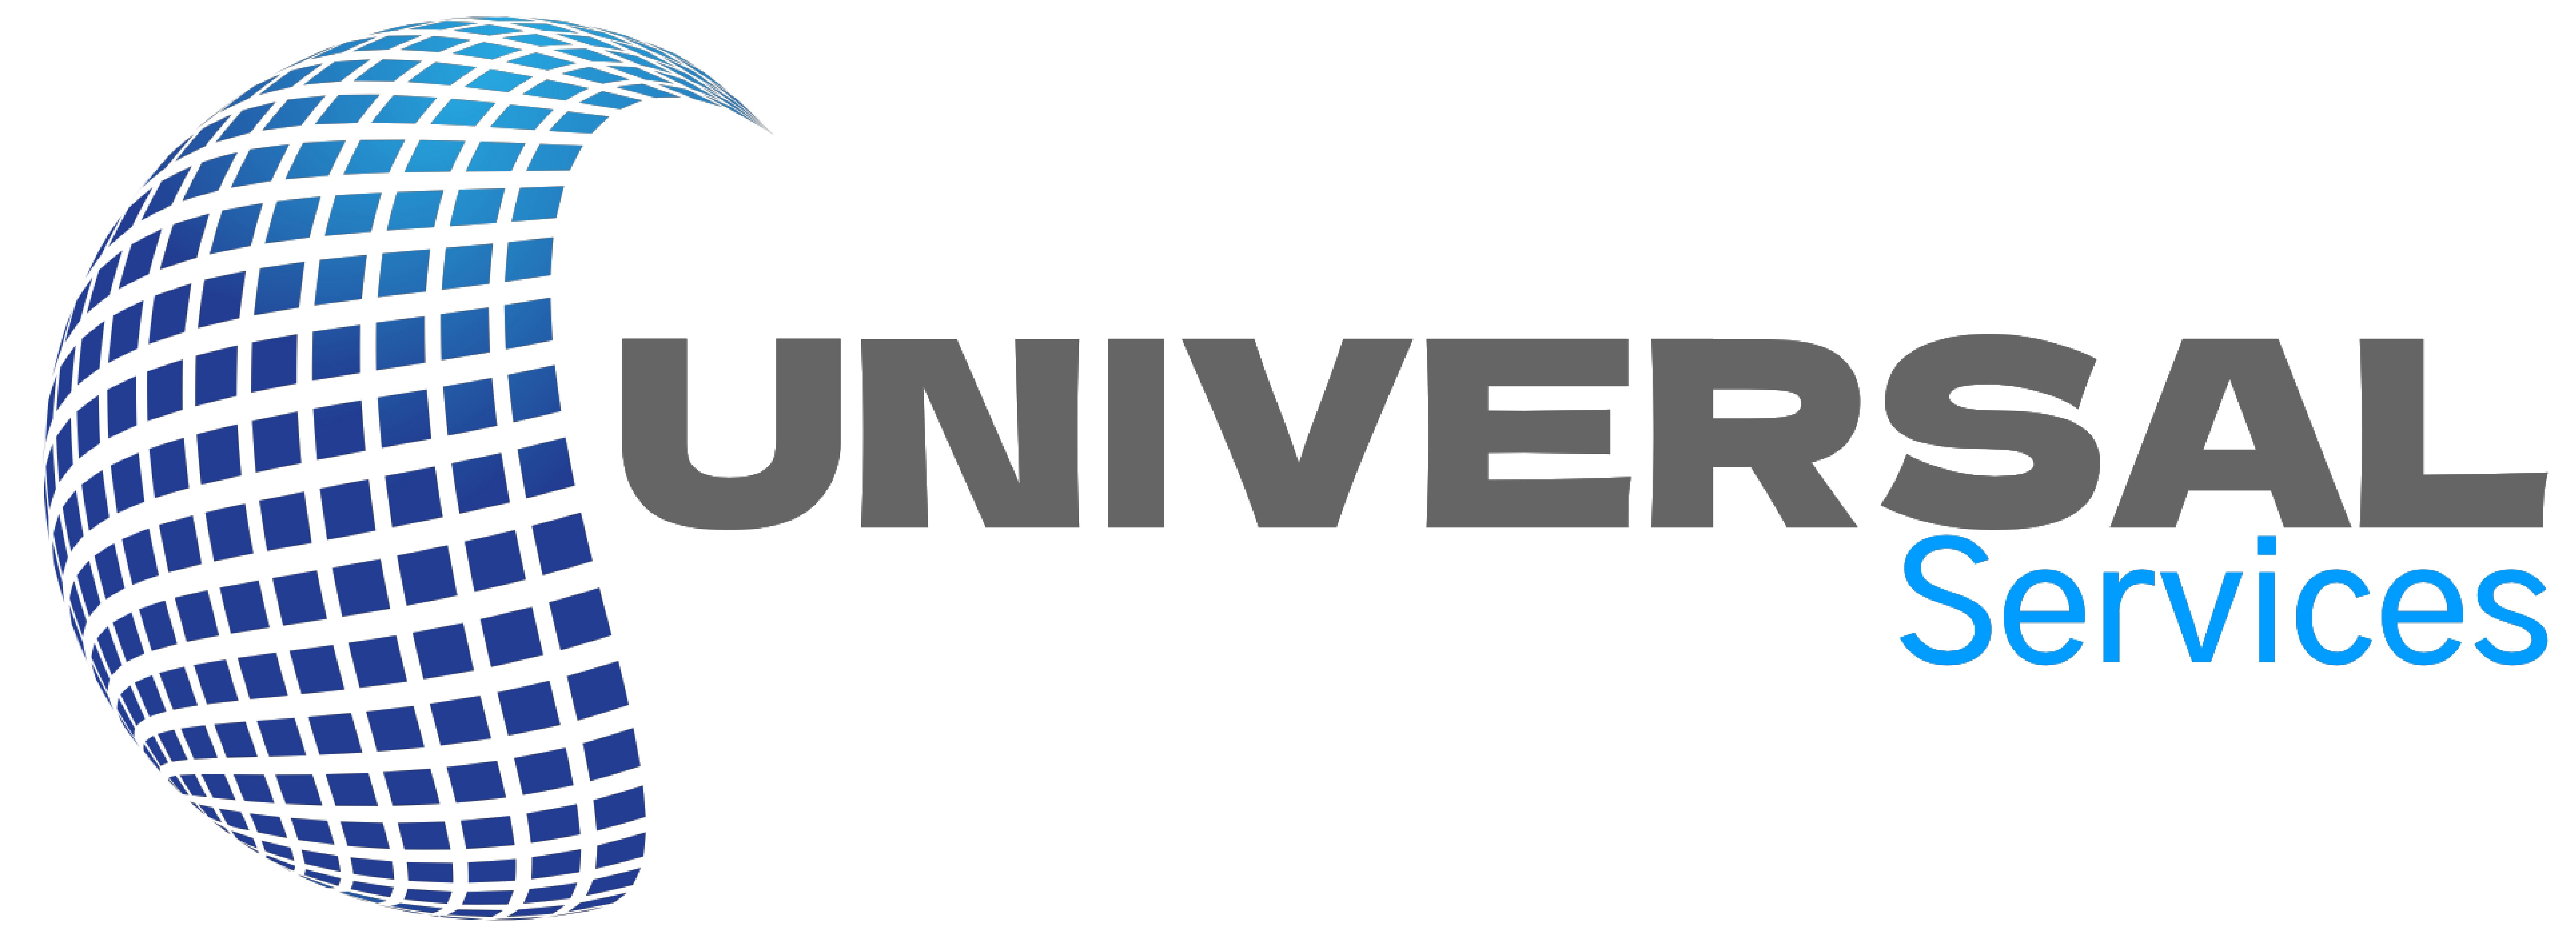 Universal Service-Home